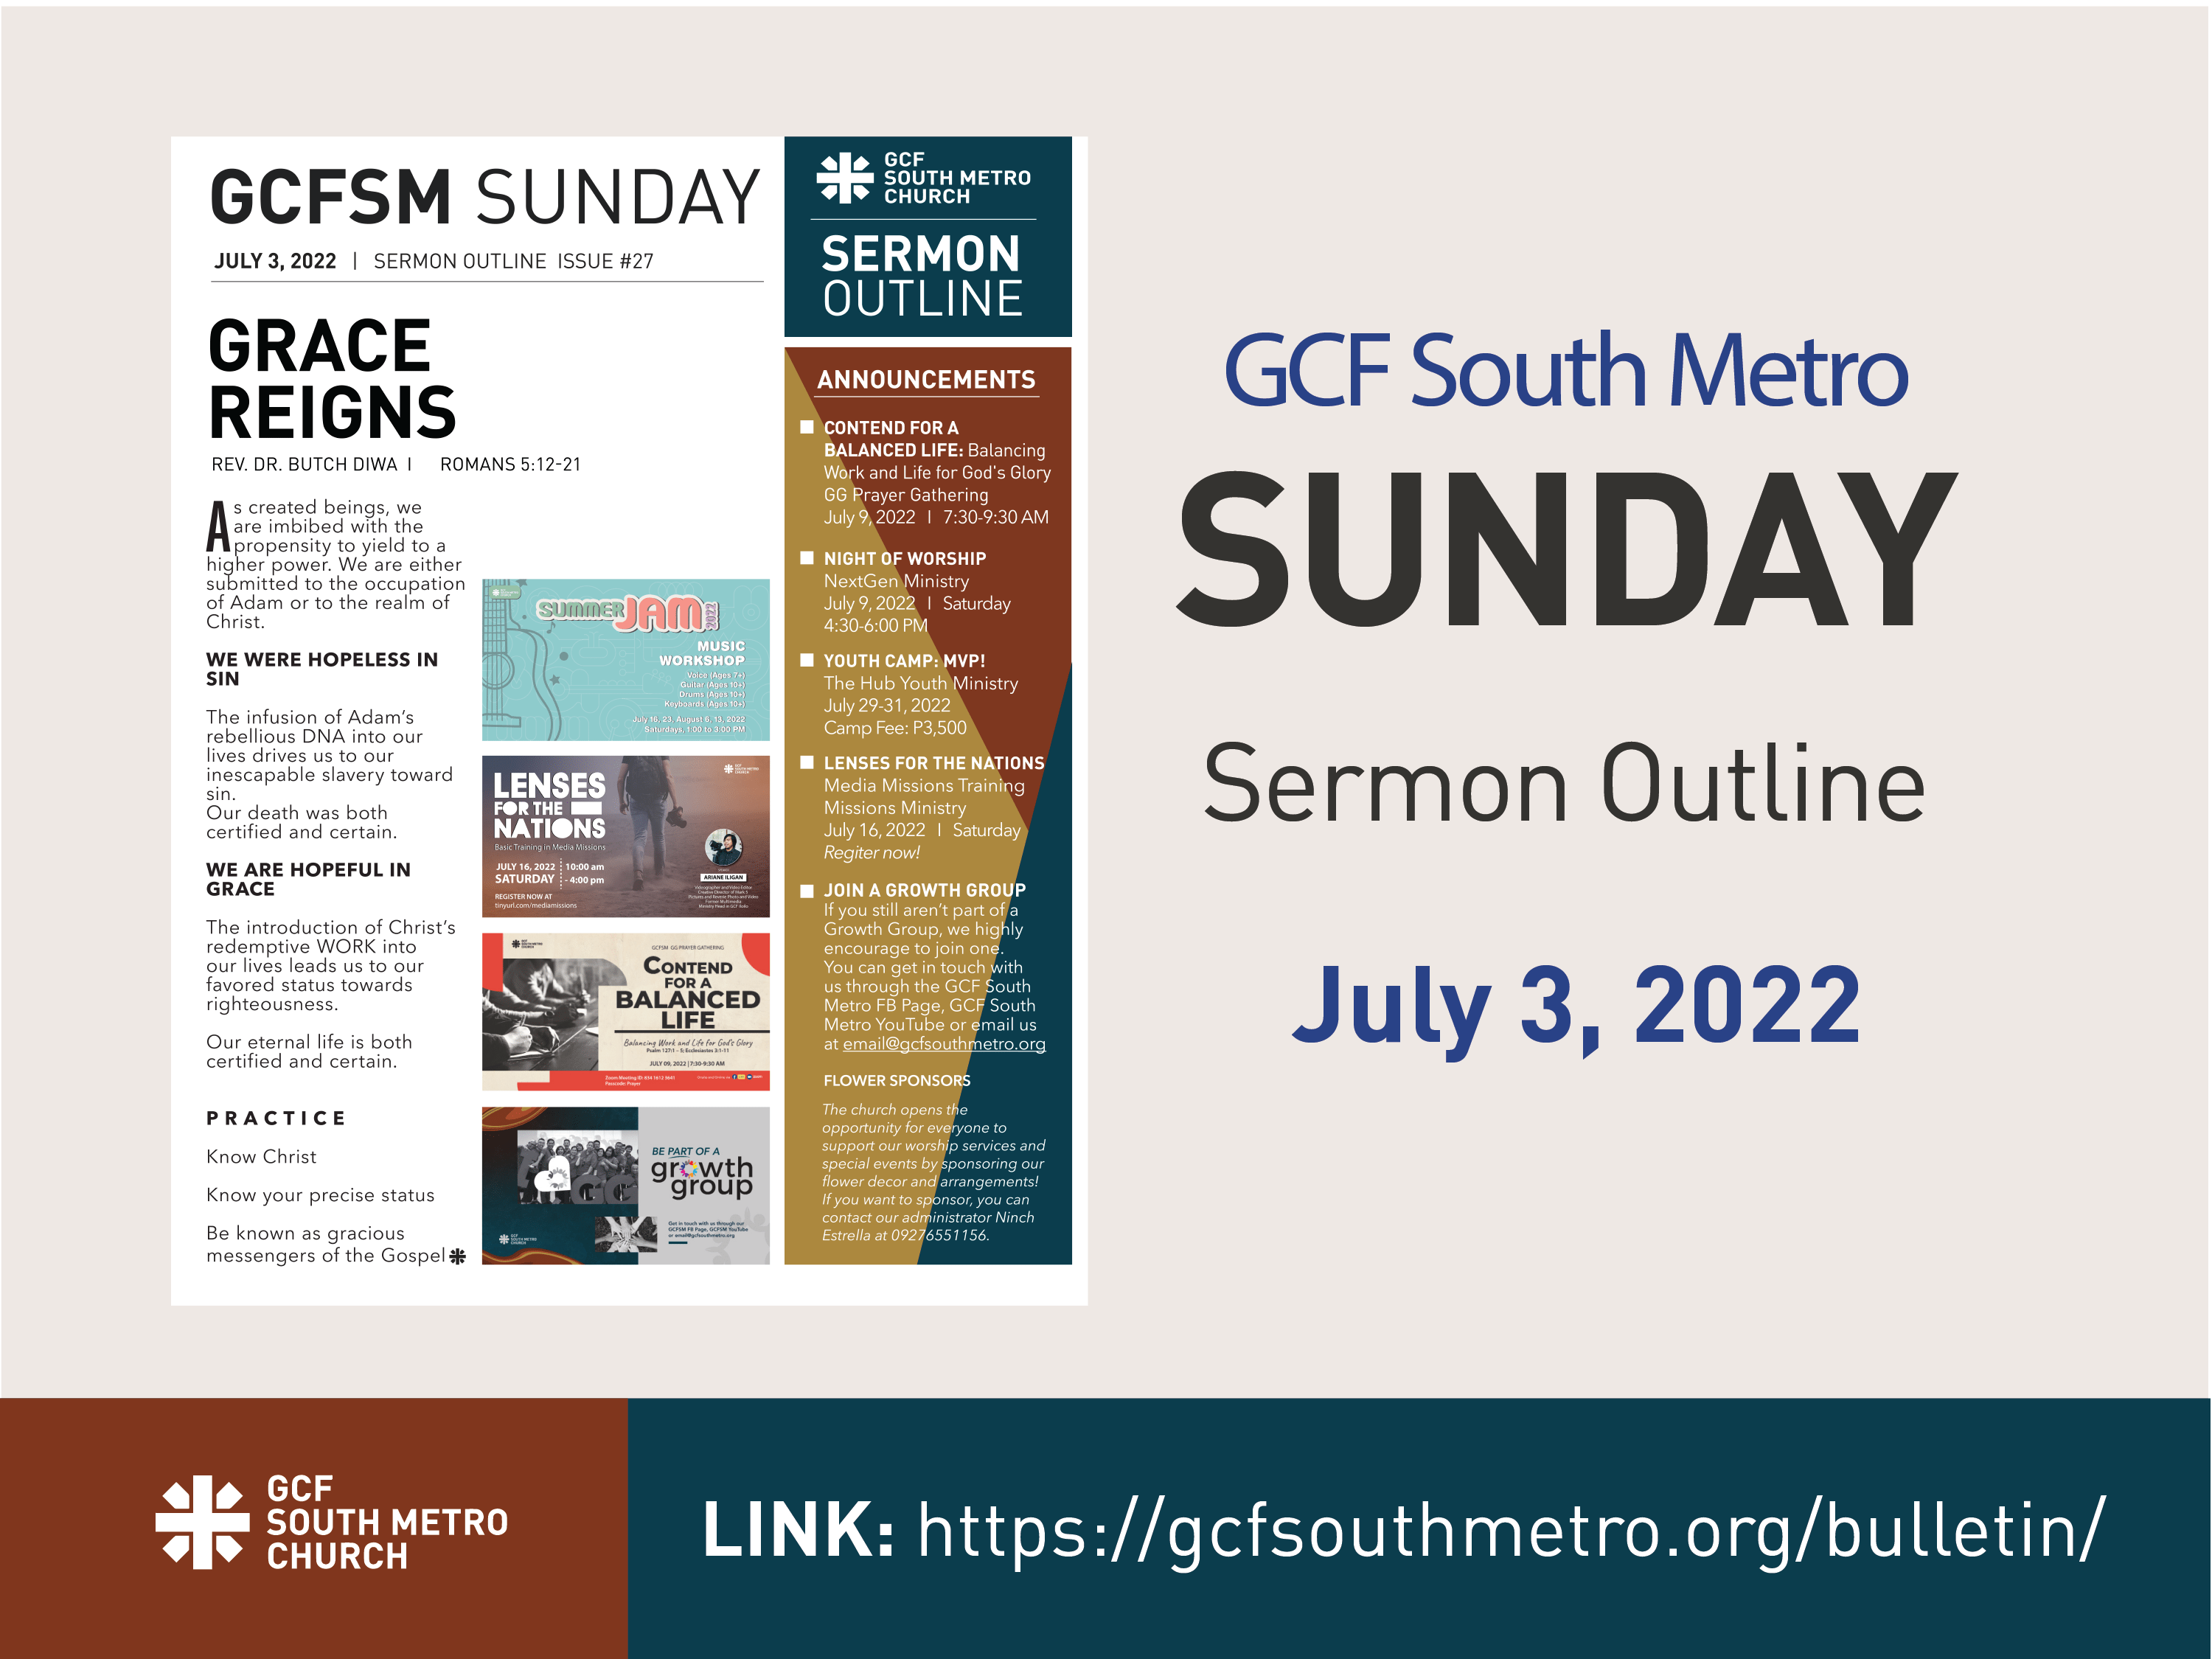 Sunday Bulletin – Sermon Outline, July 3, 2022